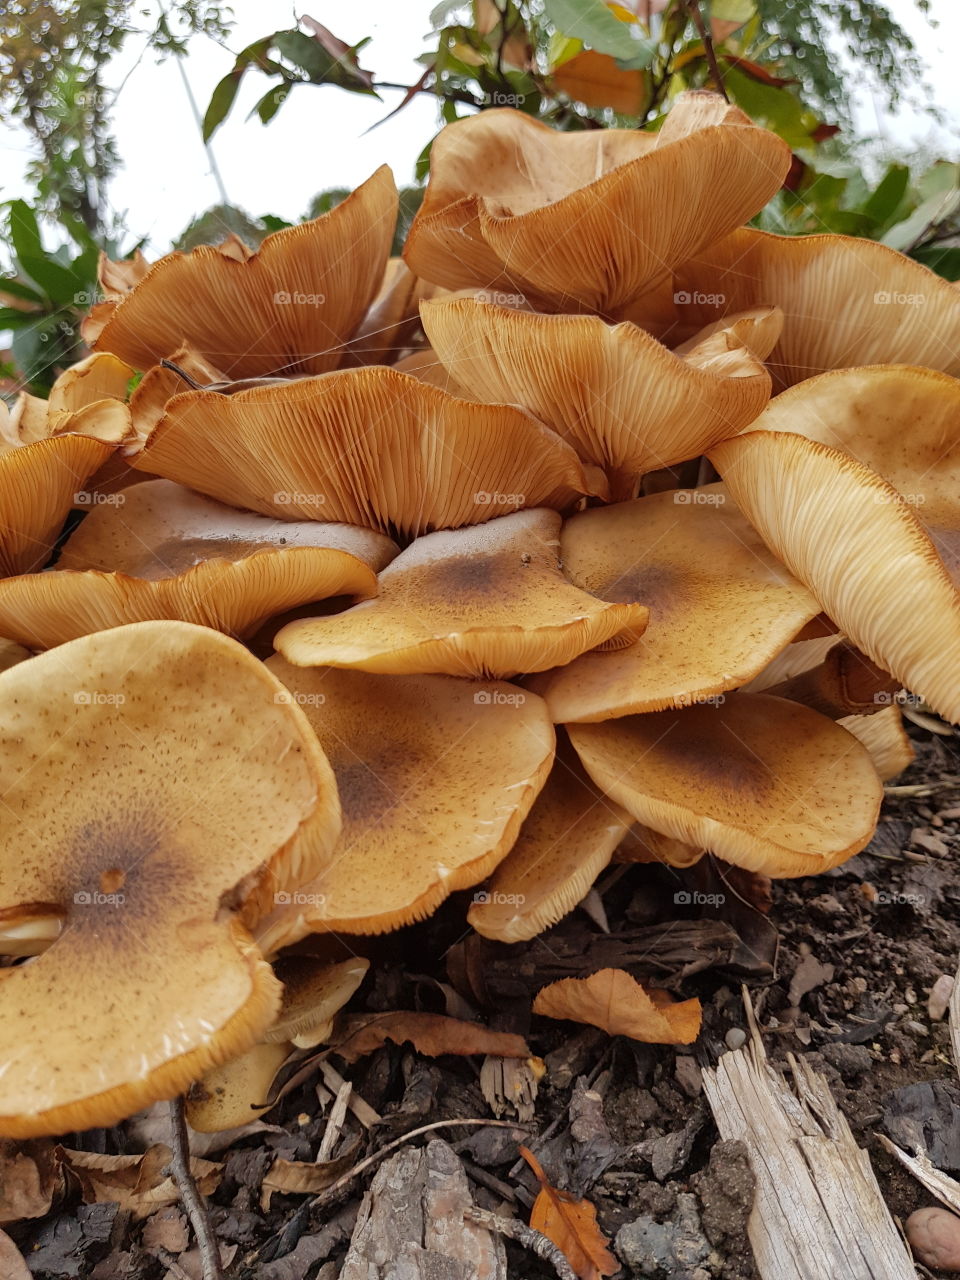 Armillaria sp, honey mushroom. gold coulor fungi growing amongst plants. Nottingham University.